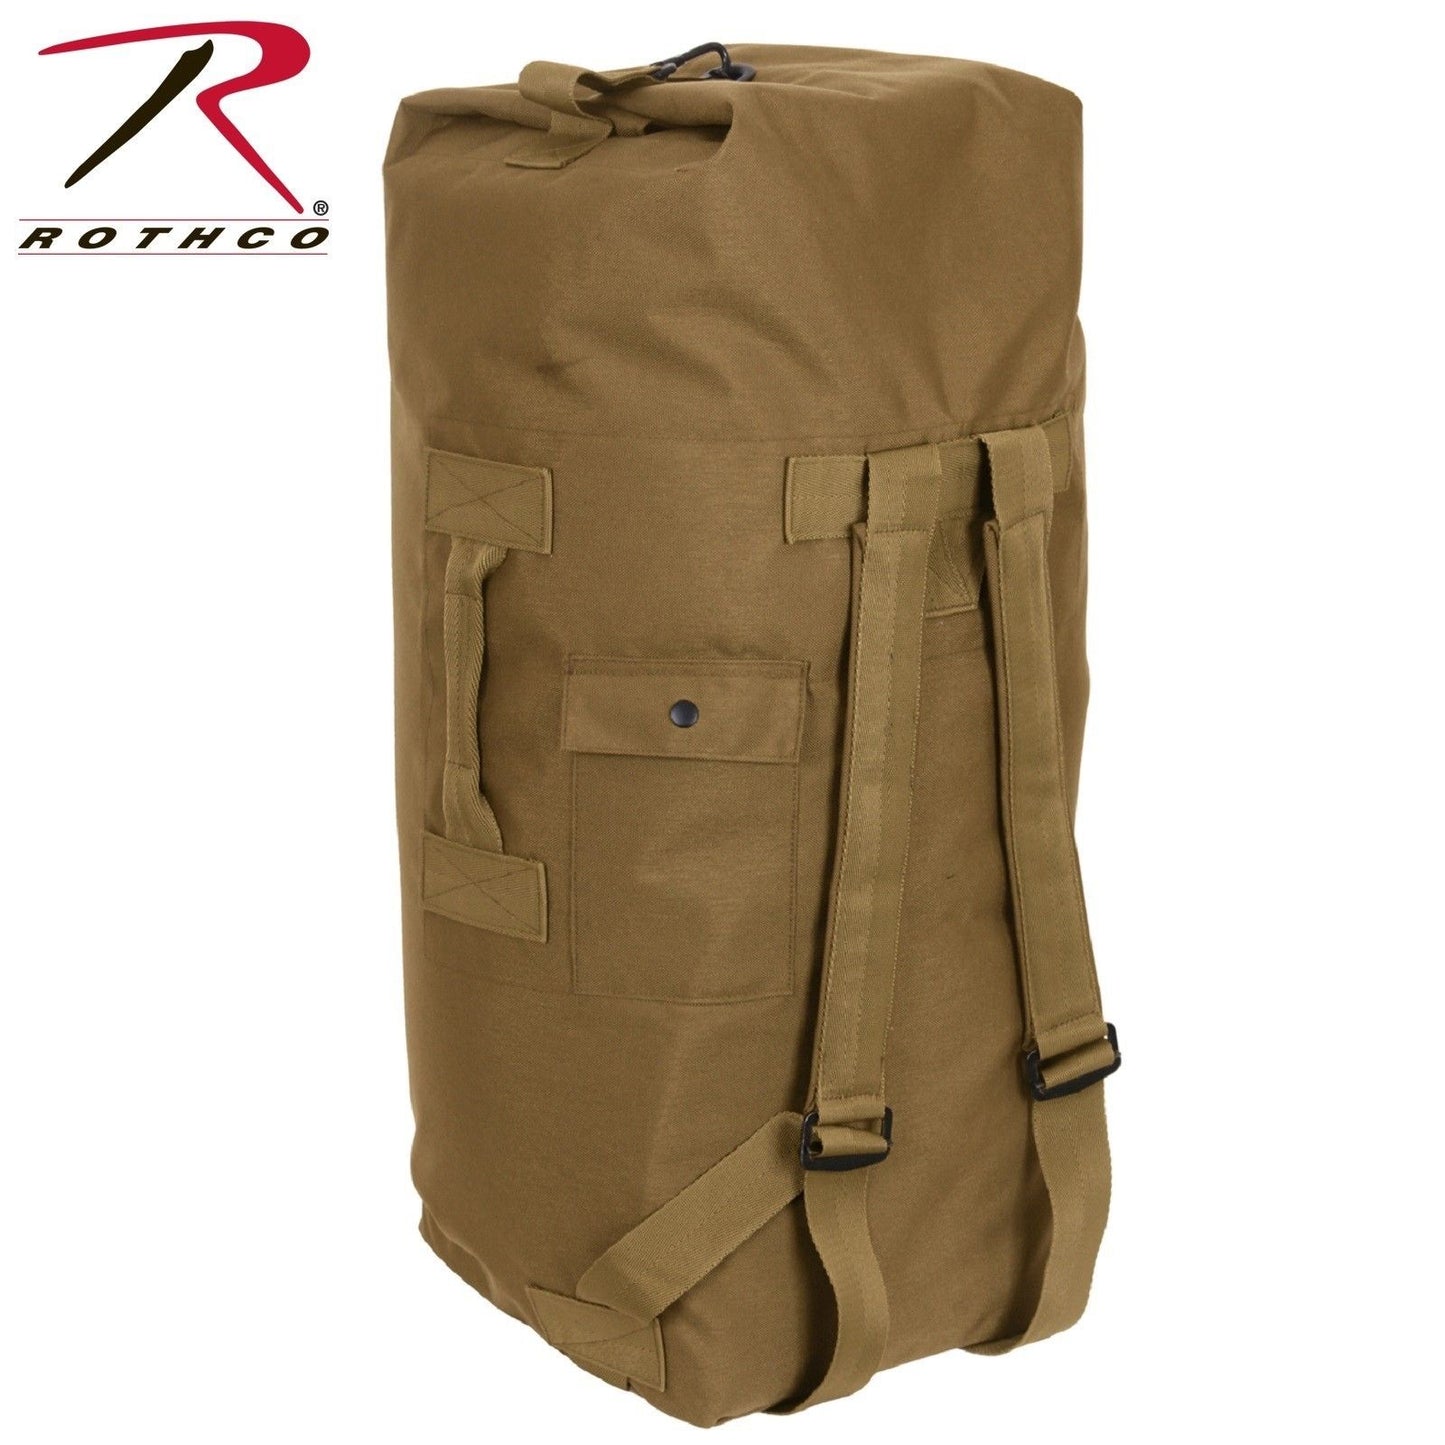 Rothco G.I. Type Enhanced Double Strap Duffle Bag - Coyote Brown Duffle